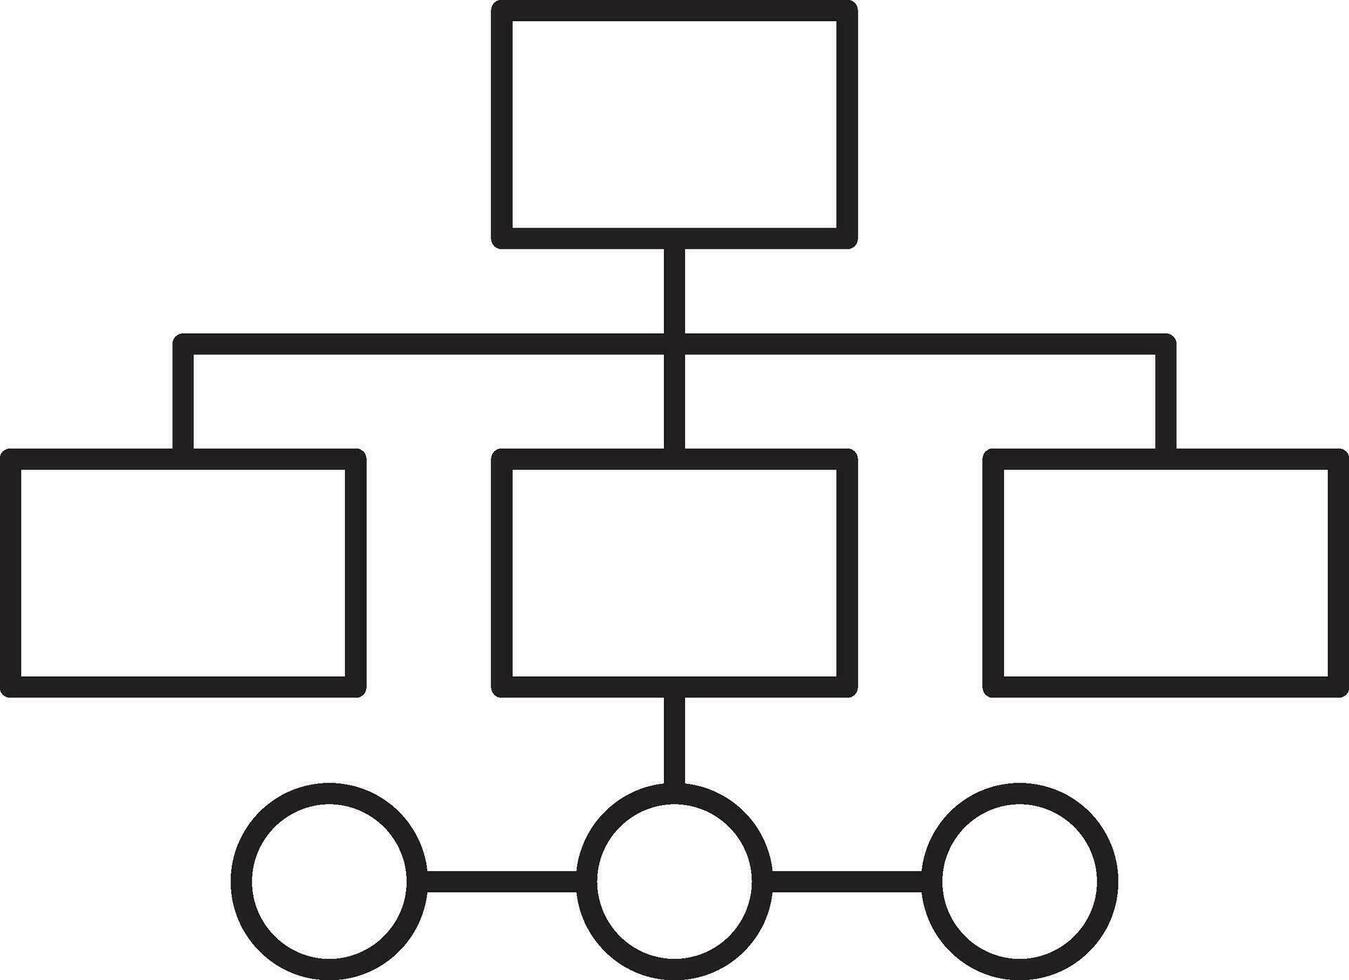 Organizational structure icon. structure icon vector